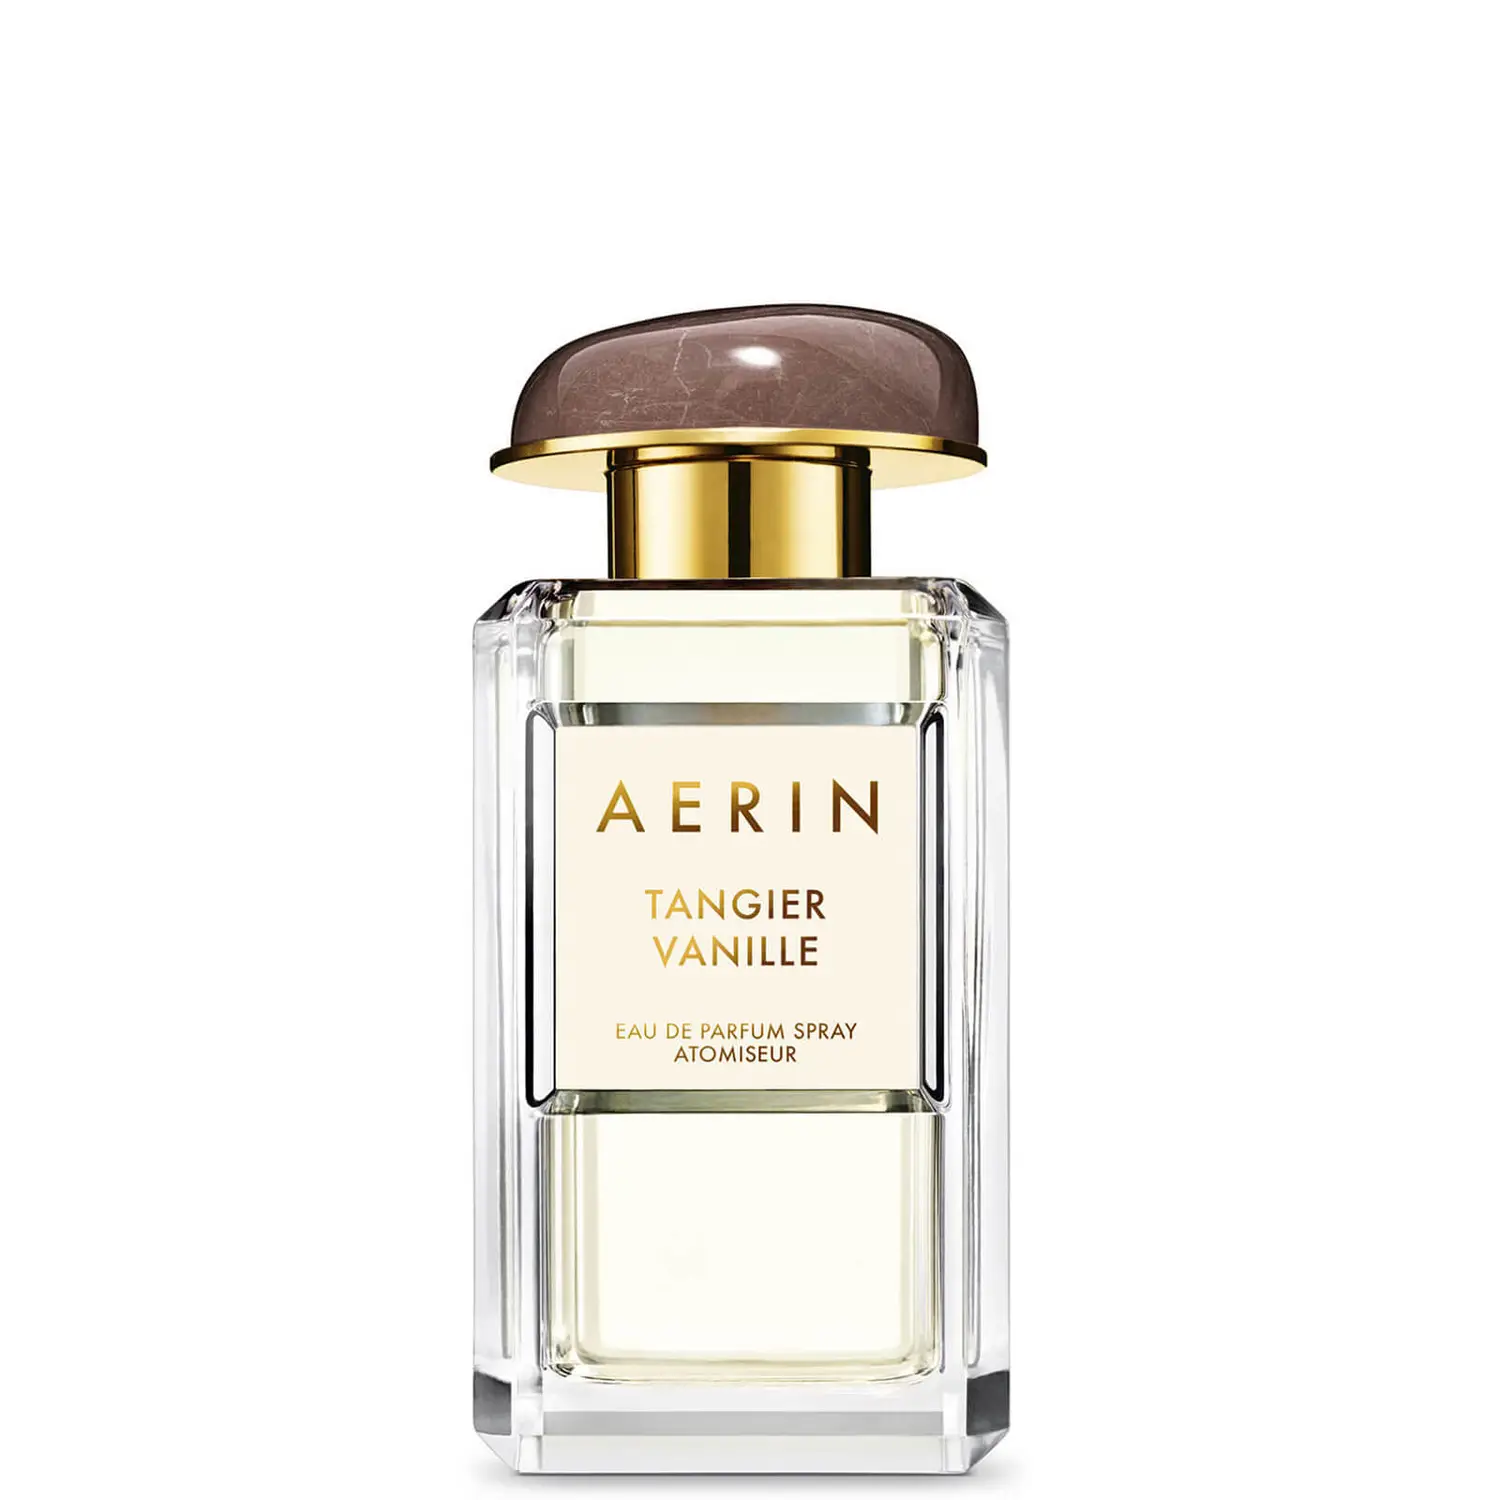 Tangier Vanille Eau de Parfum from Aerin